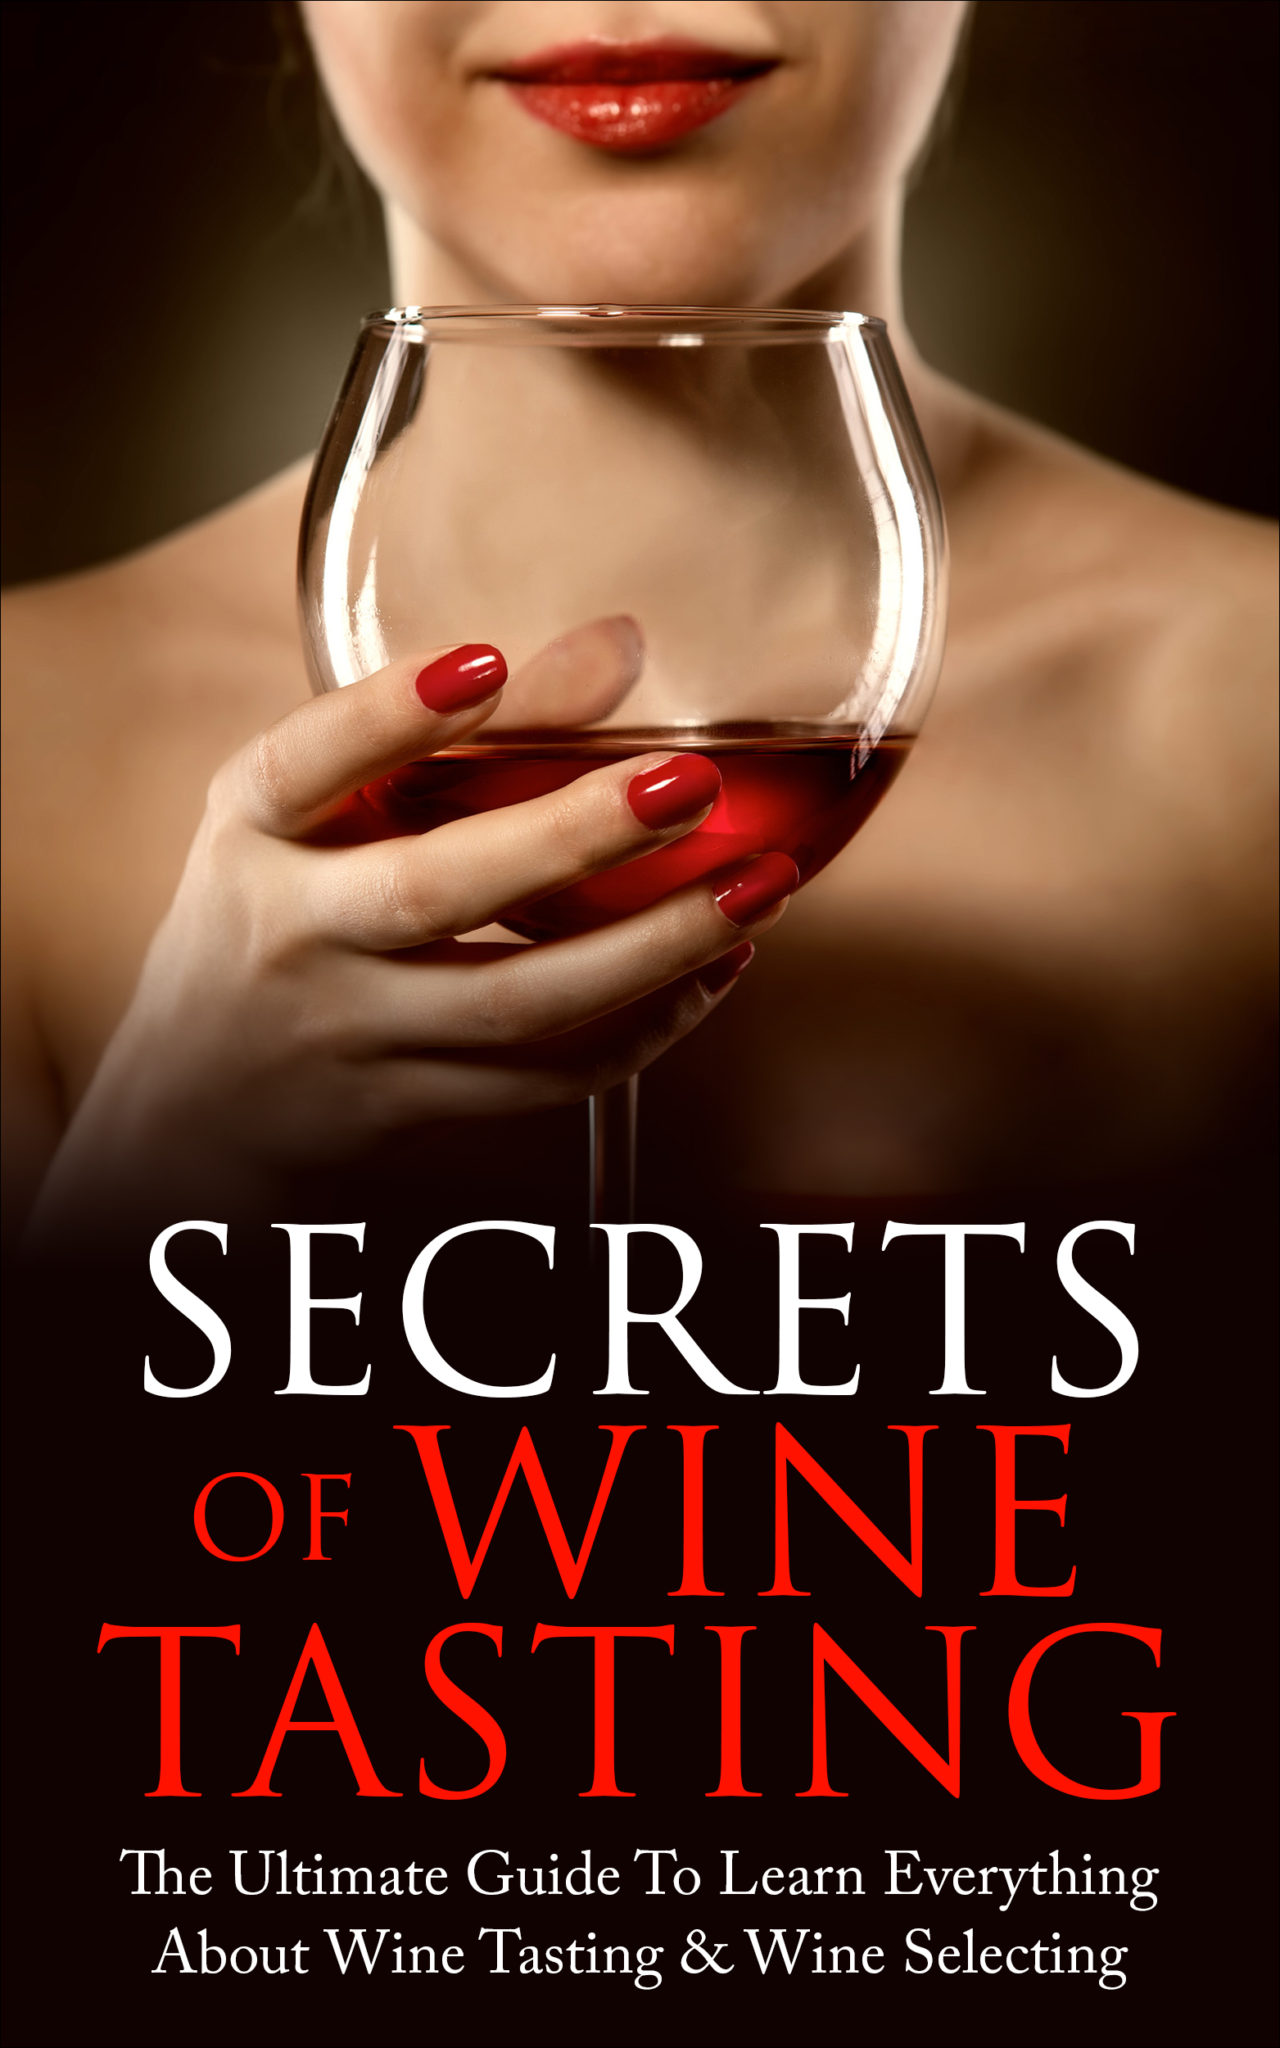 FREE: Secrets of Wine Tasting by David Dolore